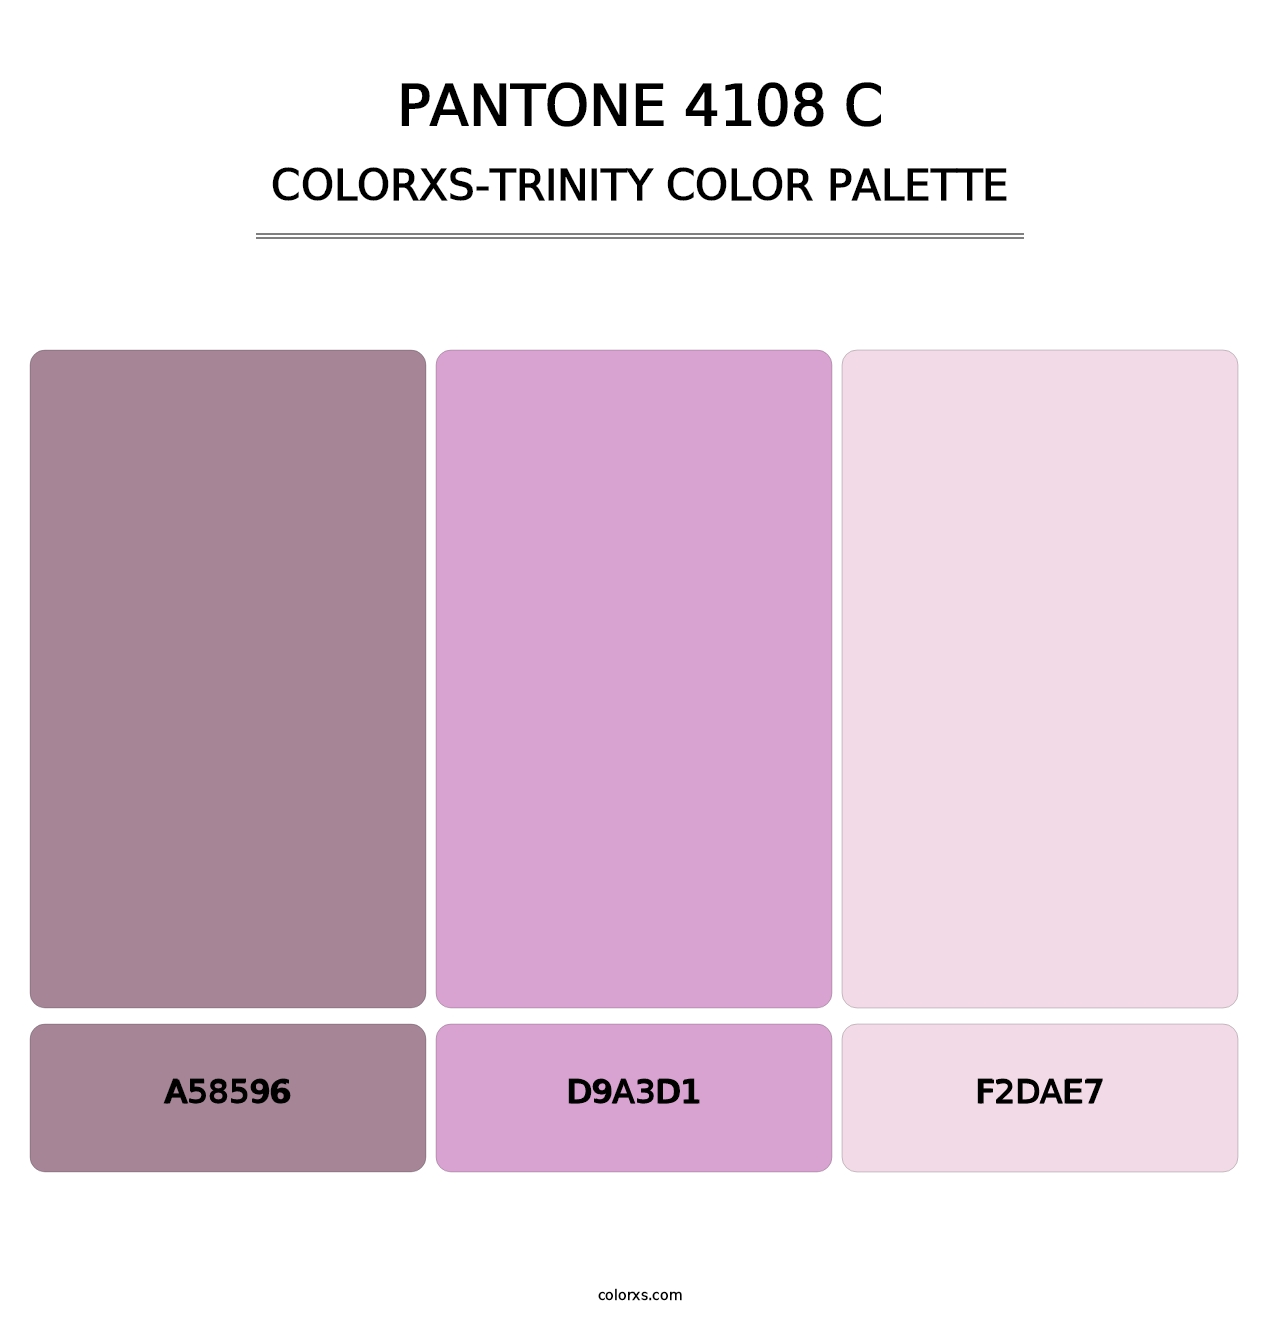 PANTONE 4108 C - Colorxs Trinity Palette